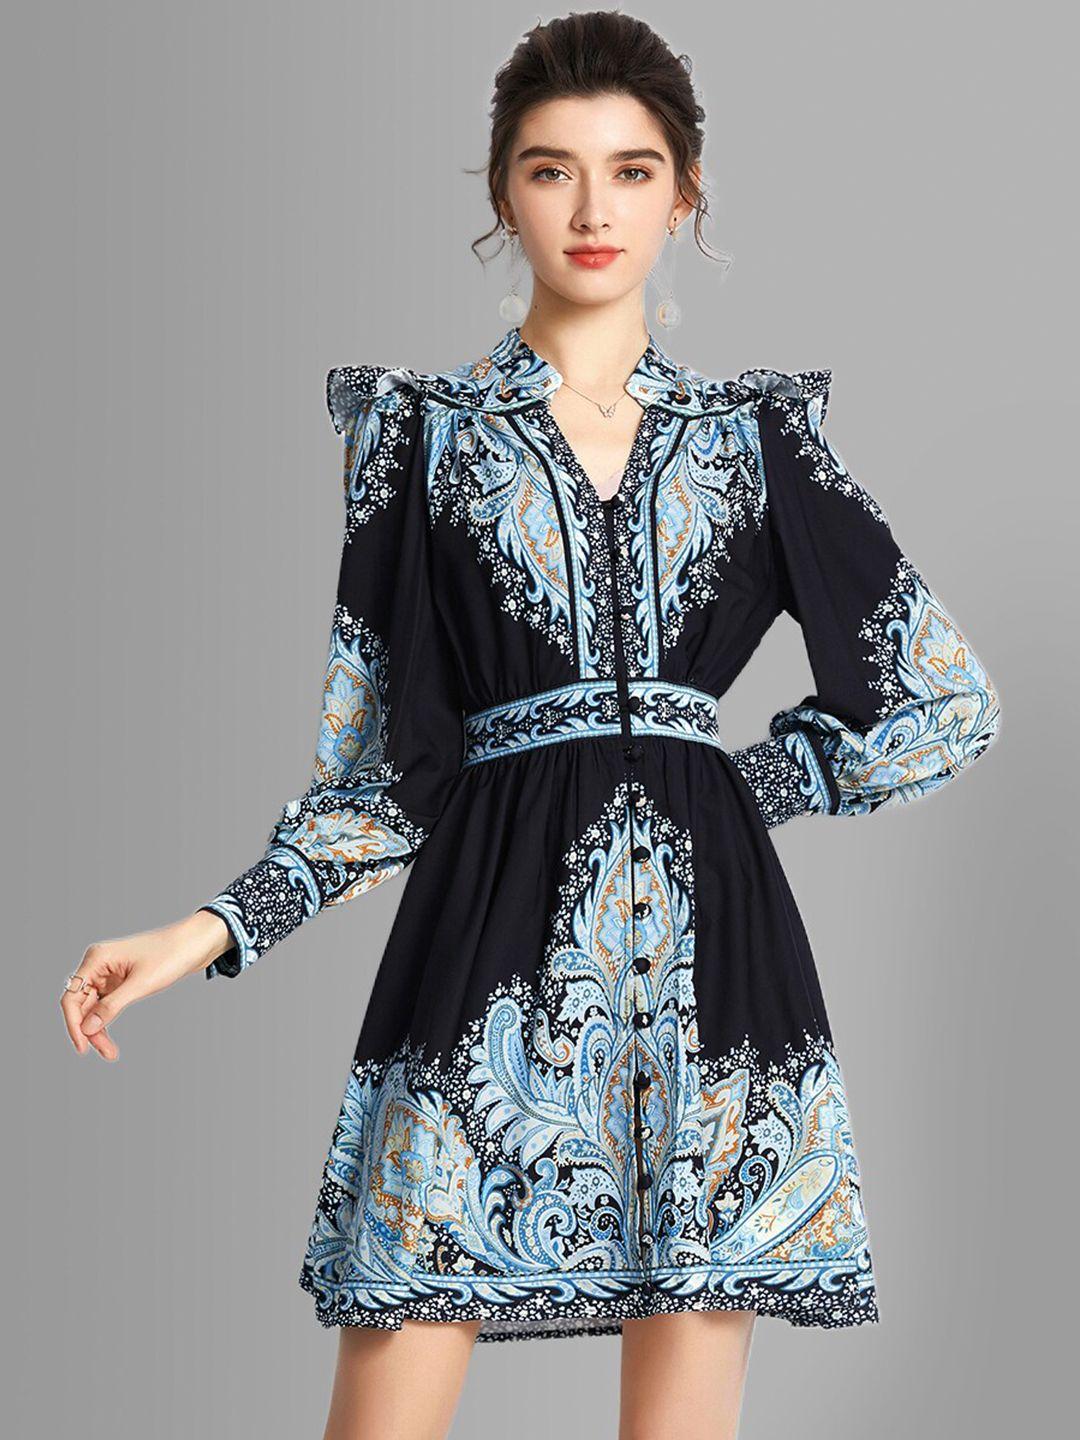 jc collection women black & blue ethnic motifs dress